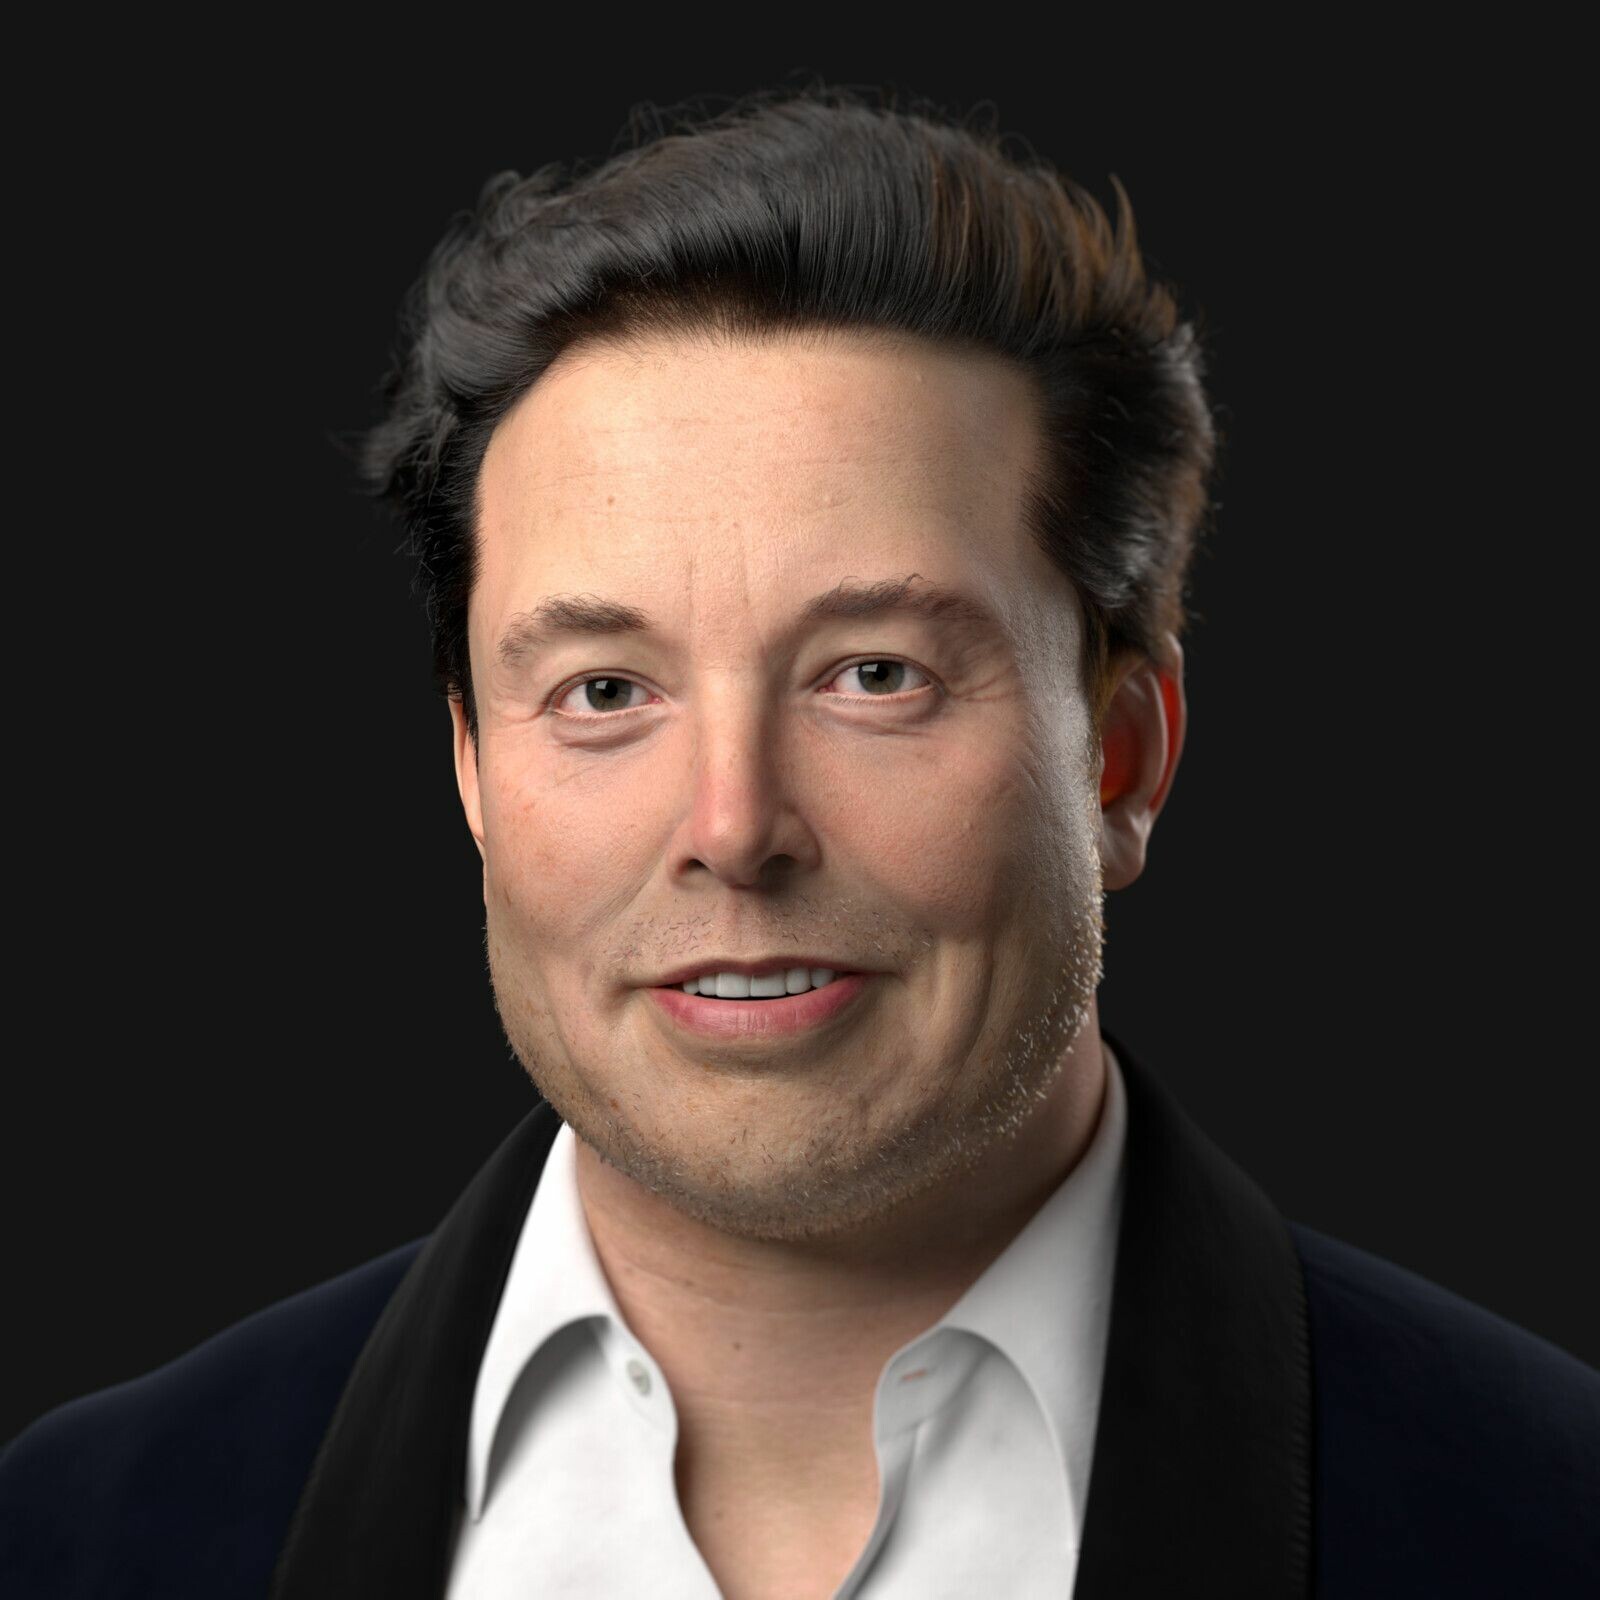 Elon Musk T-Pose - Buy Royalty Free 3D model by Elephai (@elephai) [7f4a40f]